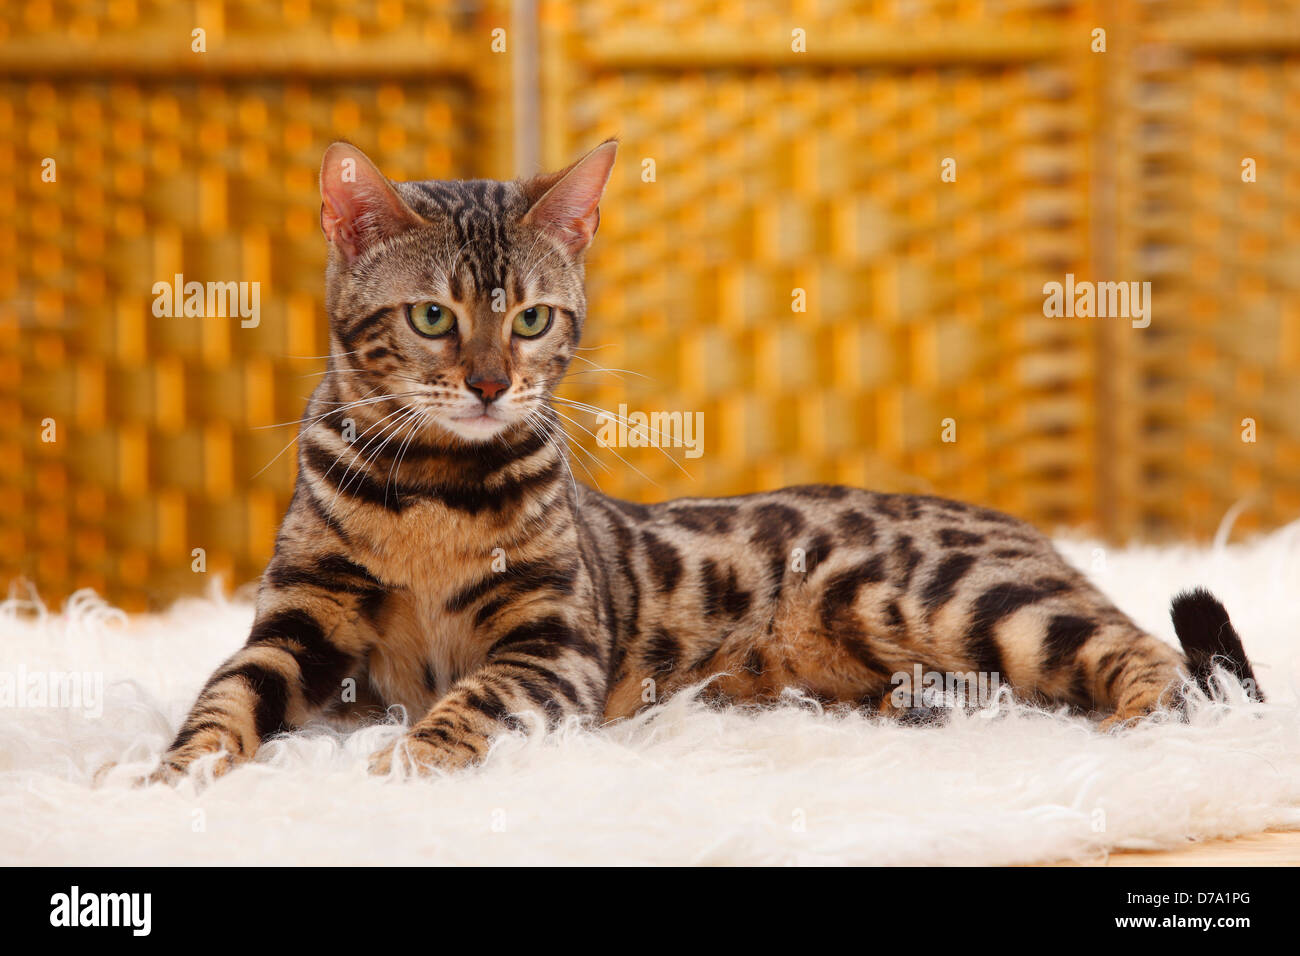 Bengal Cat |Bengalkatze Stock Photo - Alamy